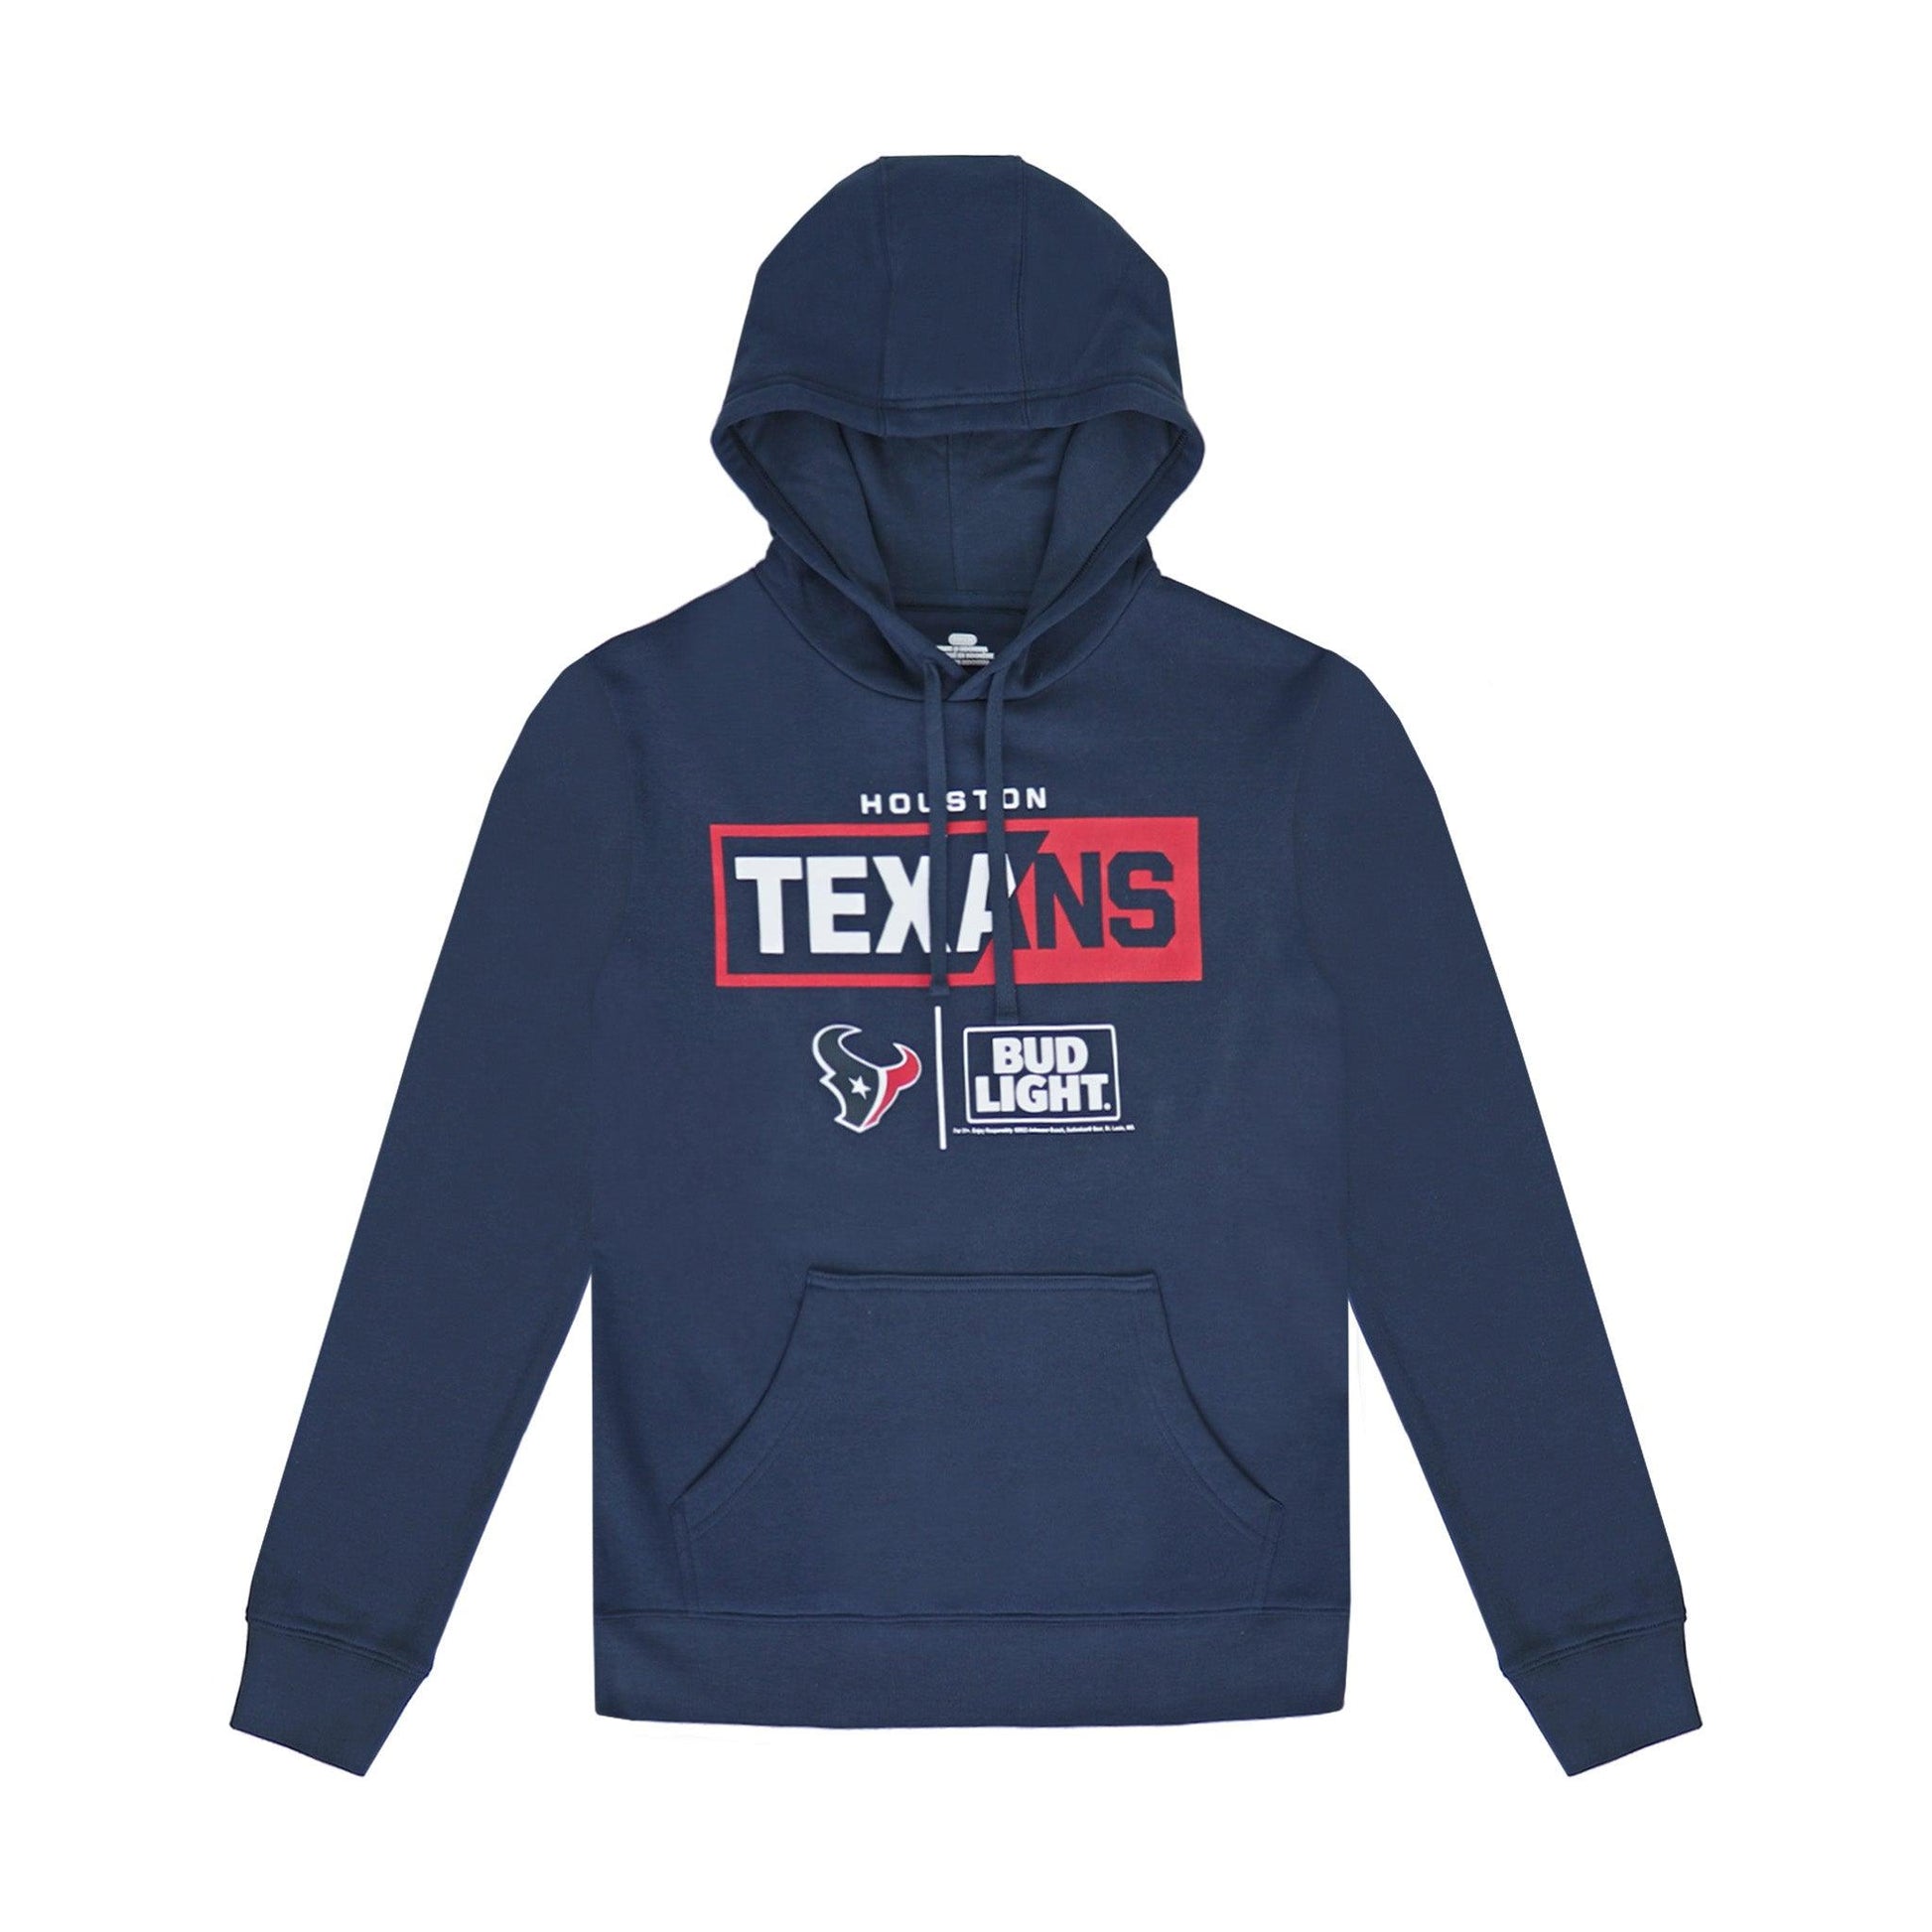 texans and bud light logos on navy hoodie